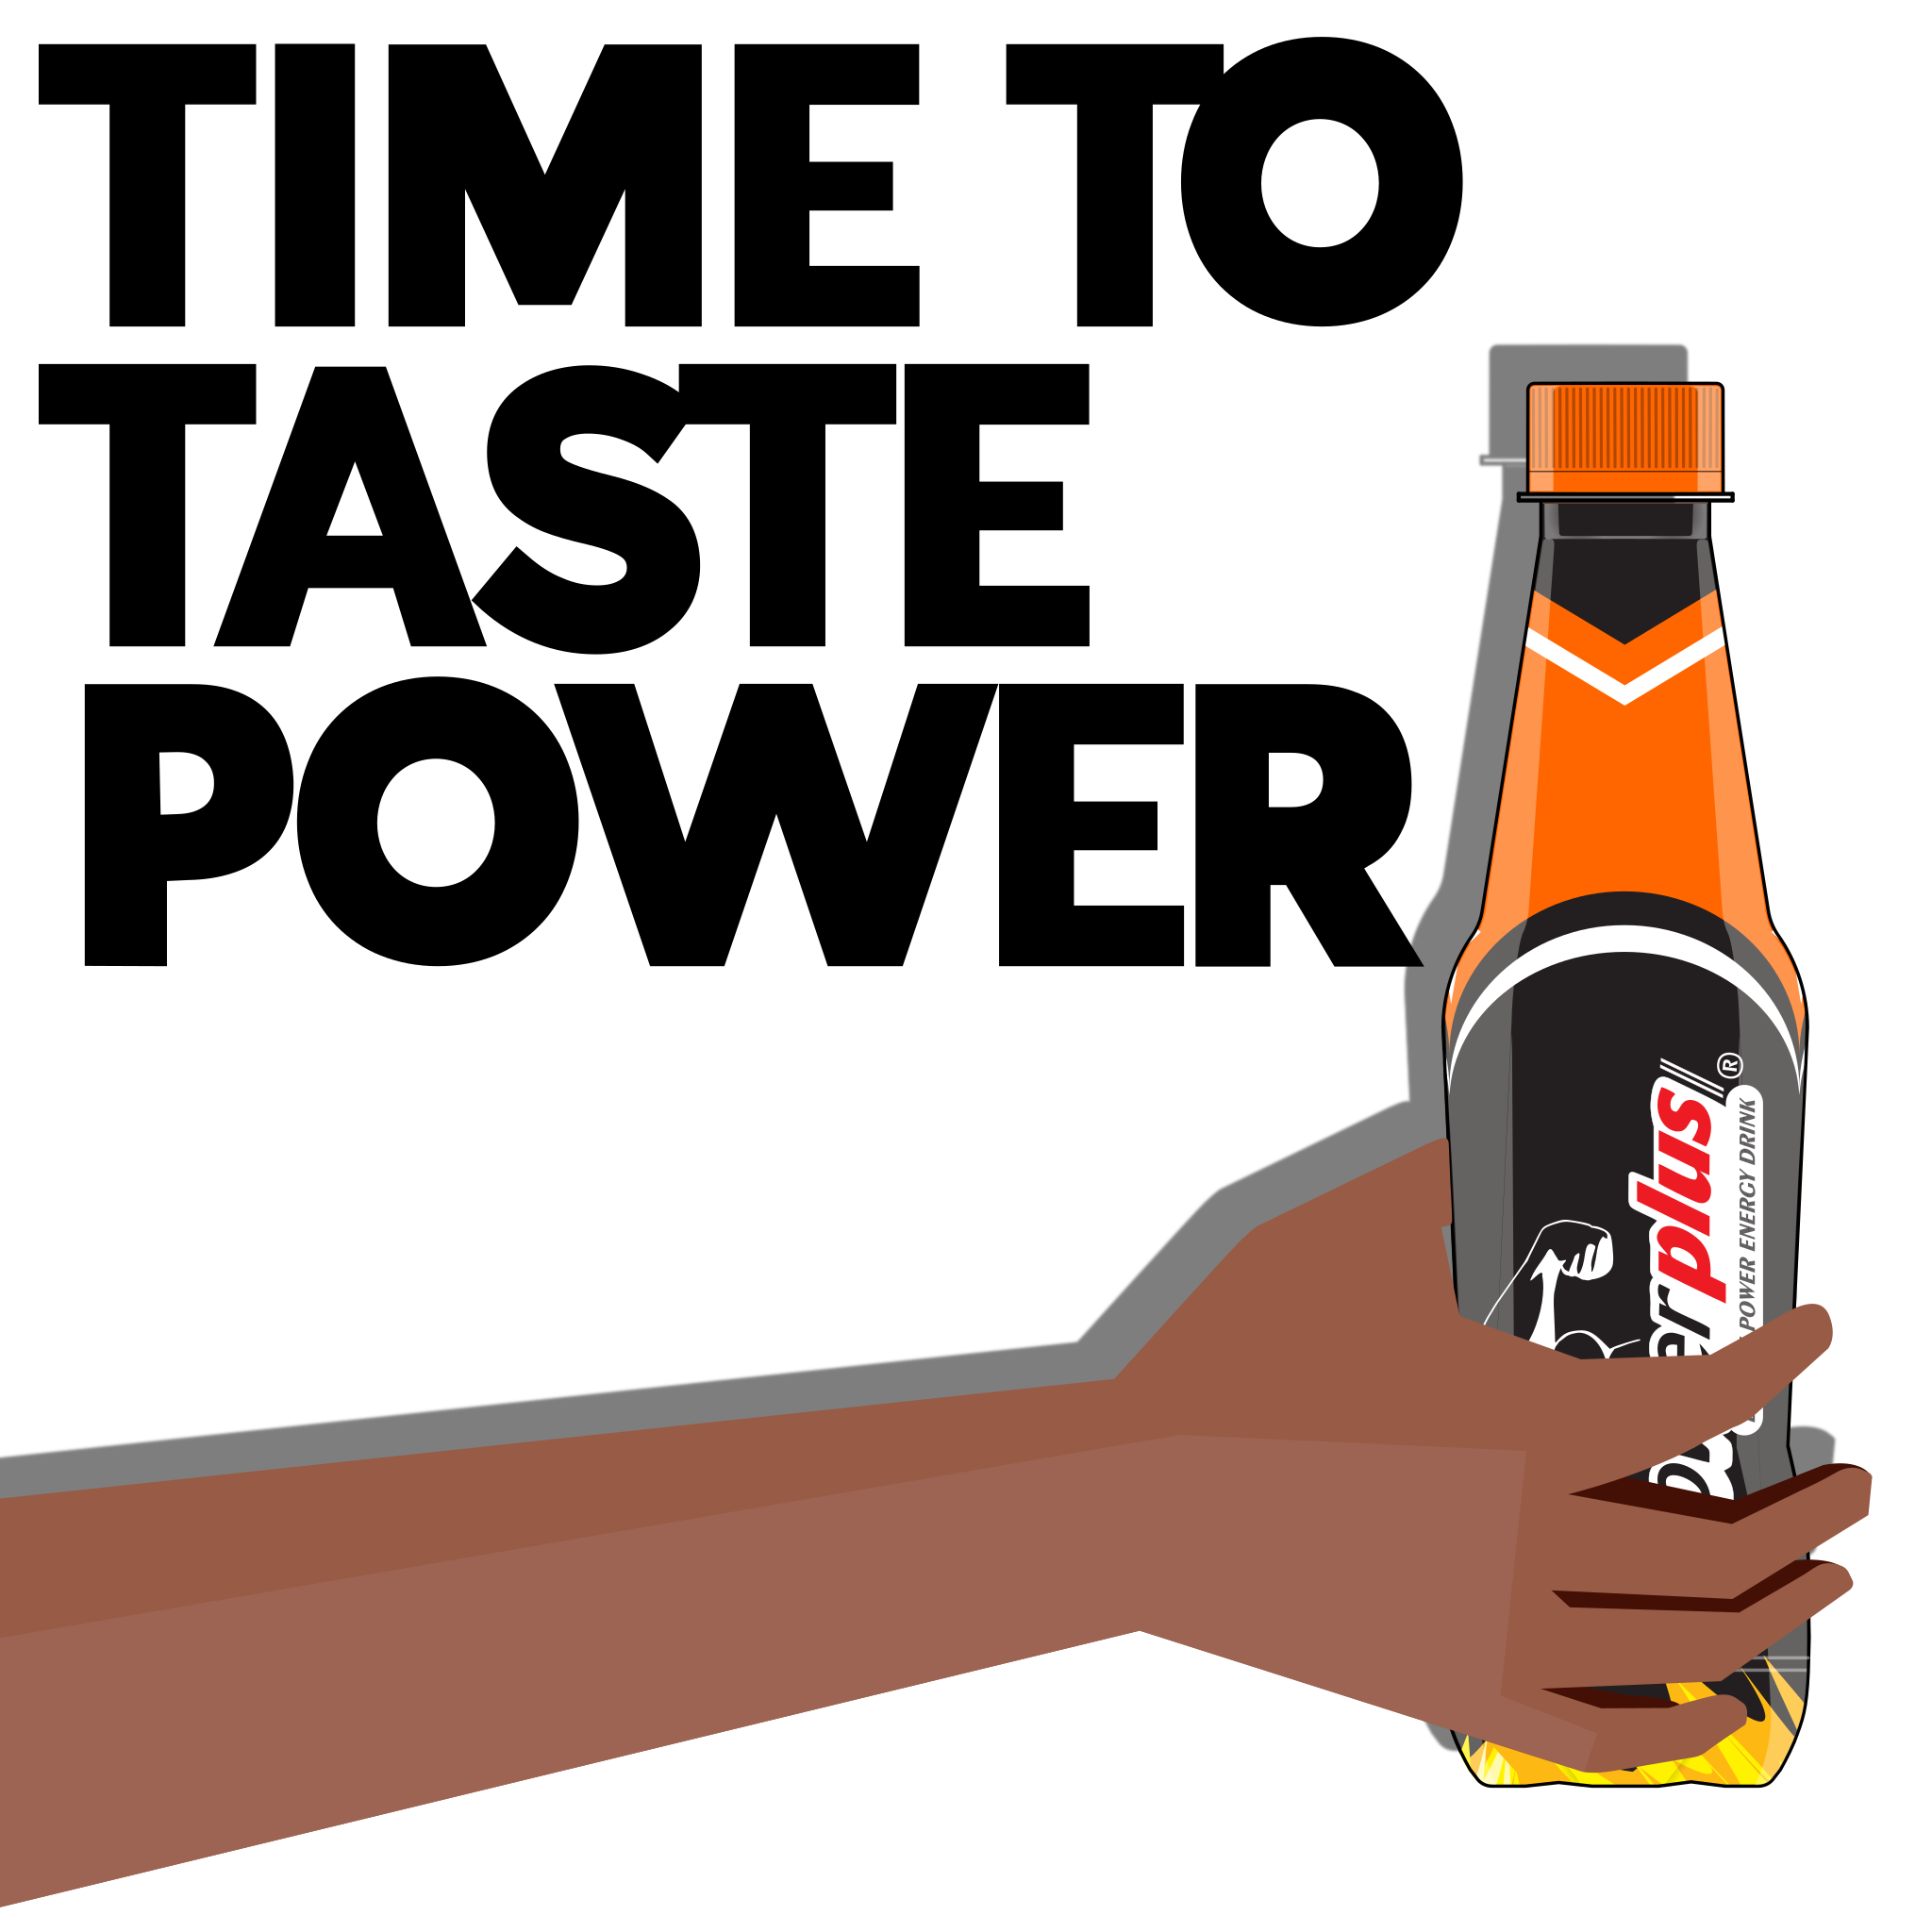 Powerplus Double Power Energy Drink - Time to Taste Power